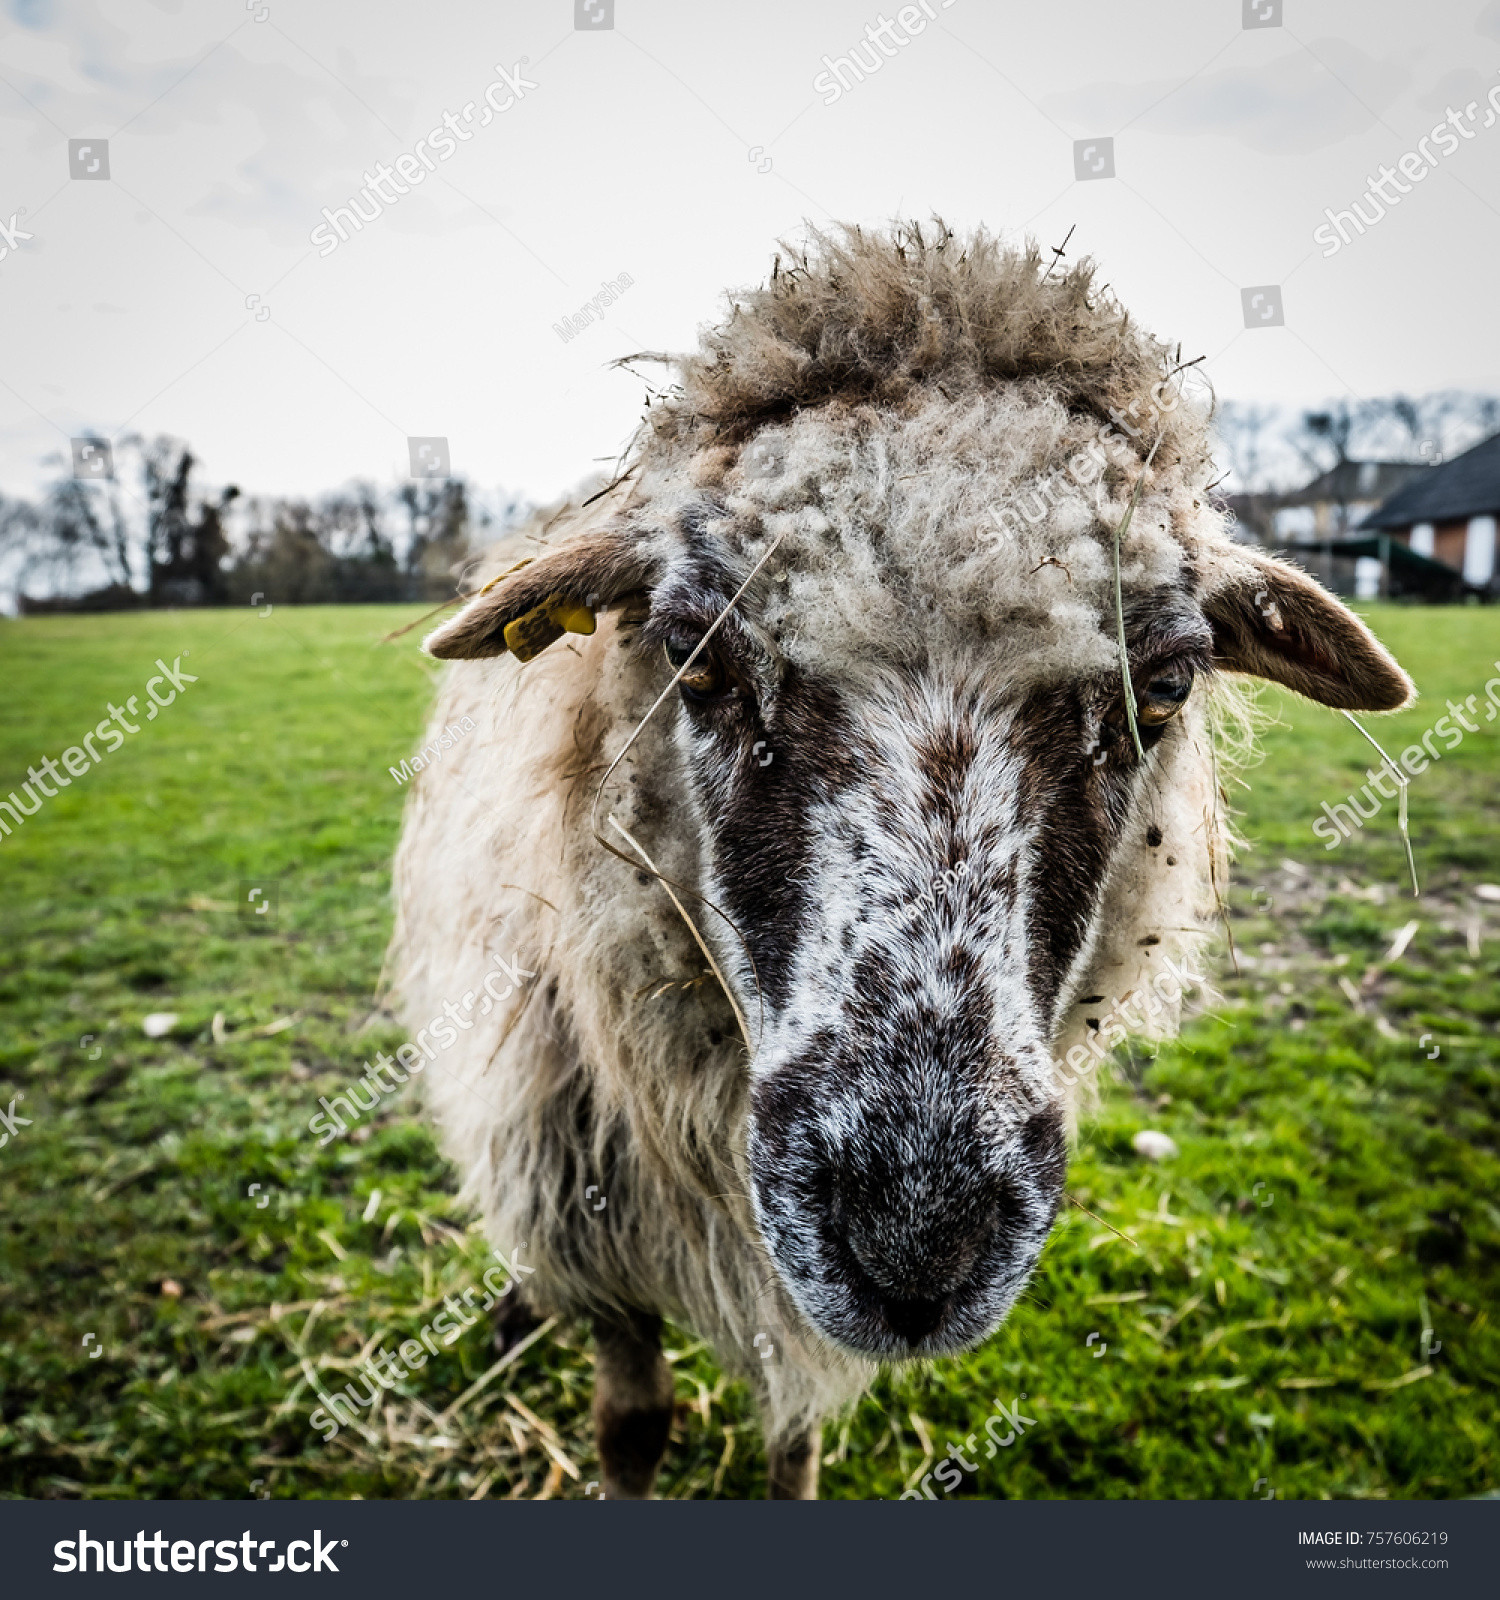 stock photo head od a sad sheep